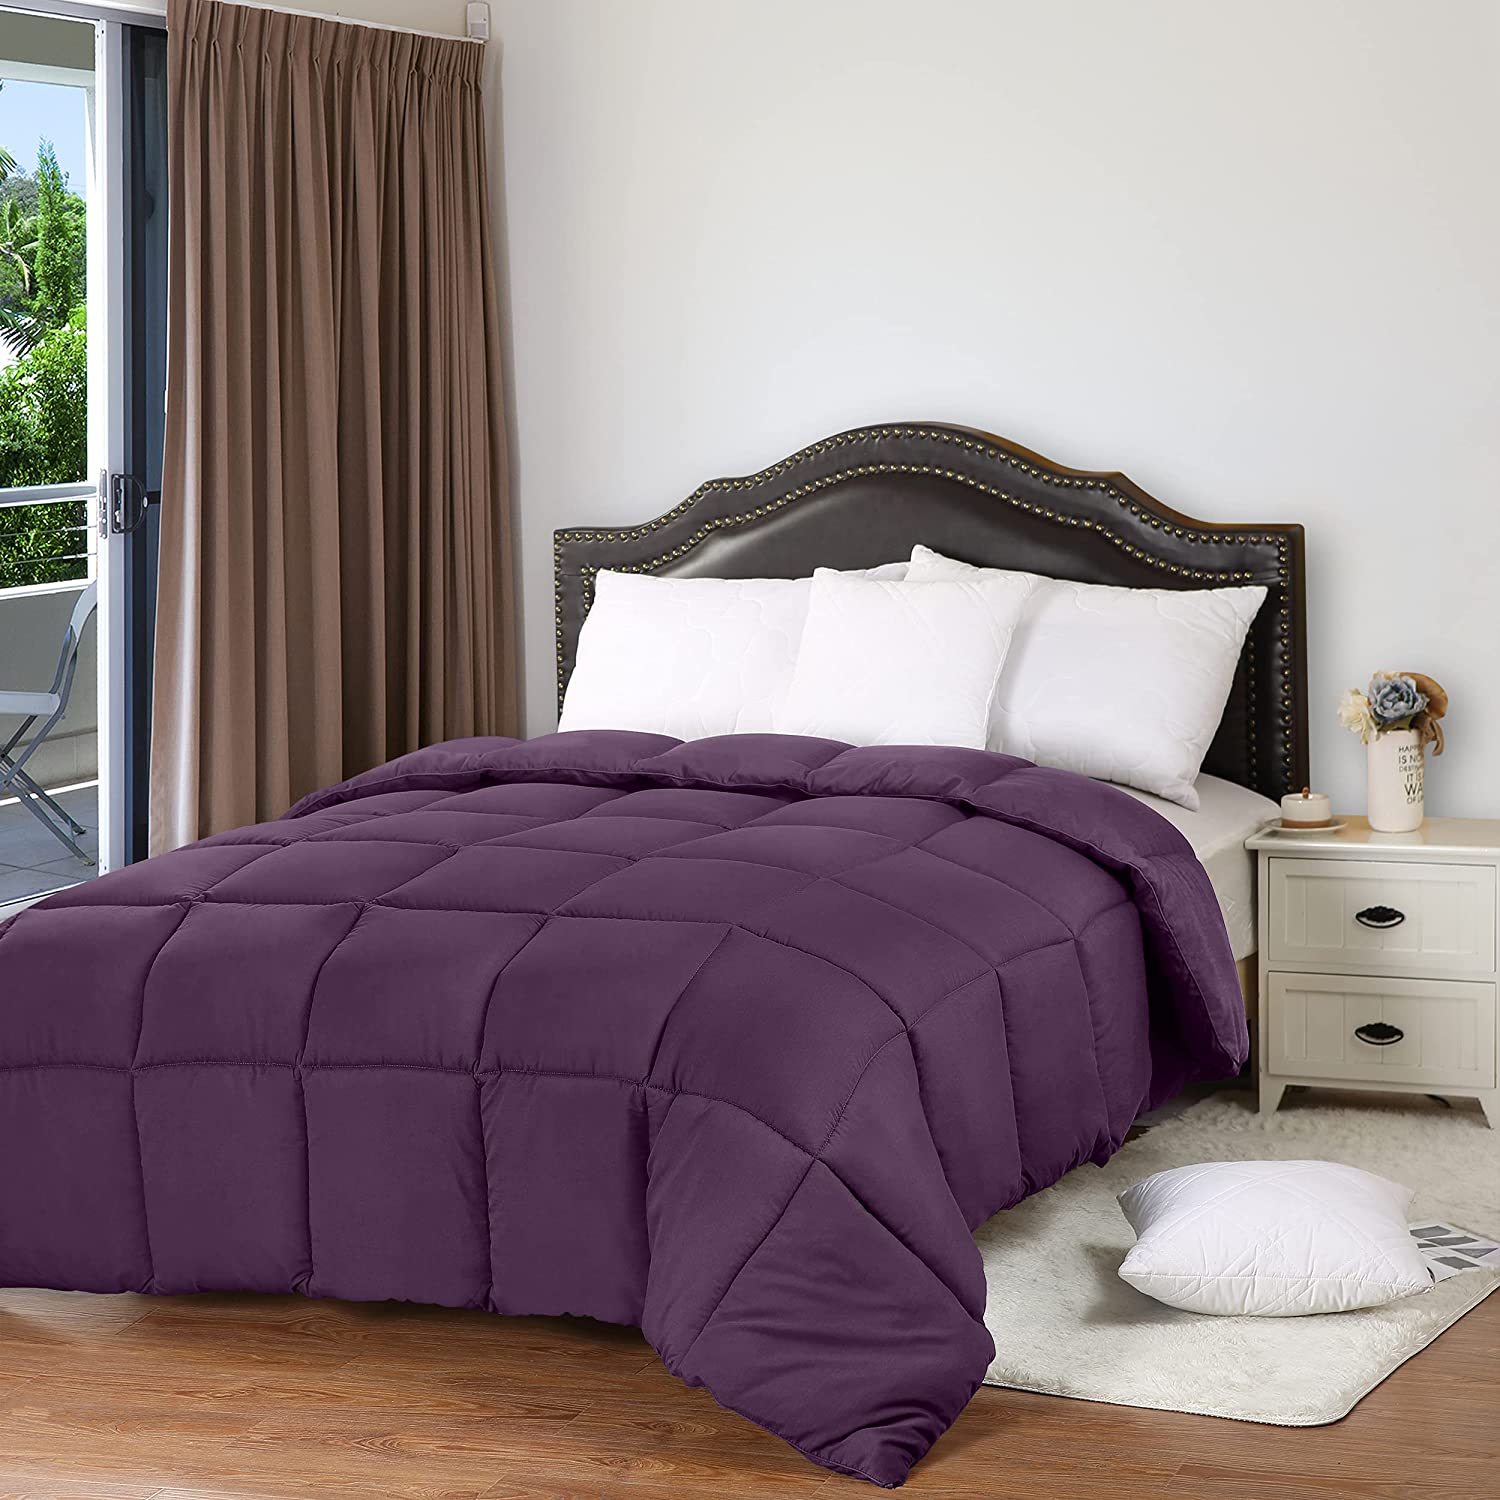 Utopia Bedding King/California King Size Comforter Set with 2 Pillow Shams  - Bedding Comforter Sets - Down Alternative White Comforter - Soft and